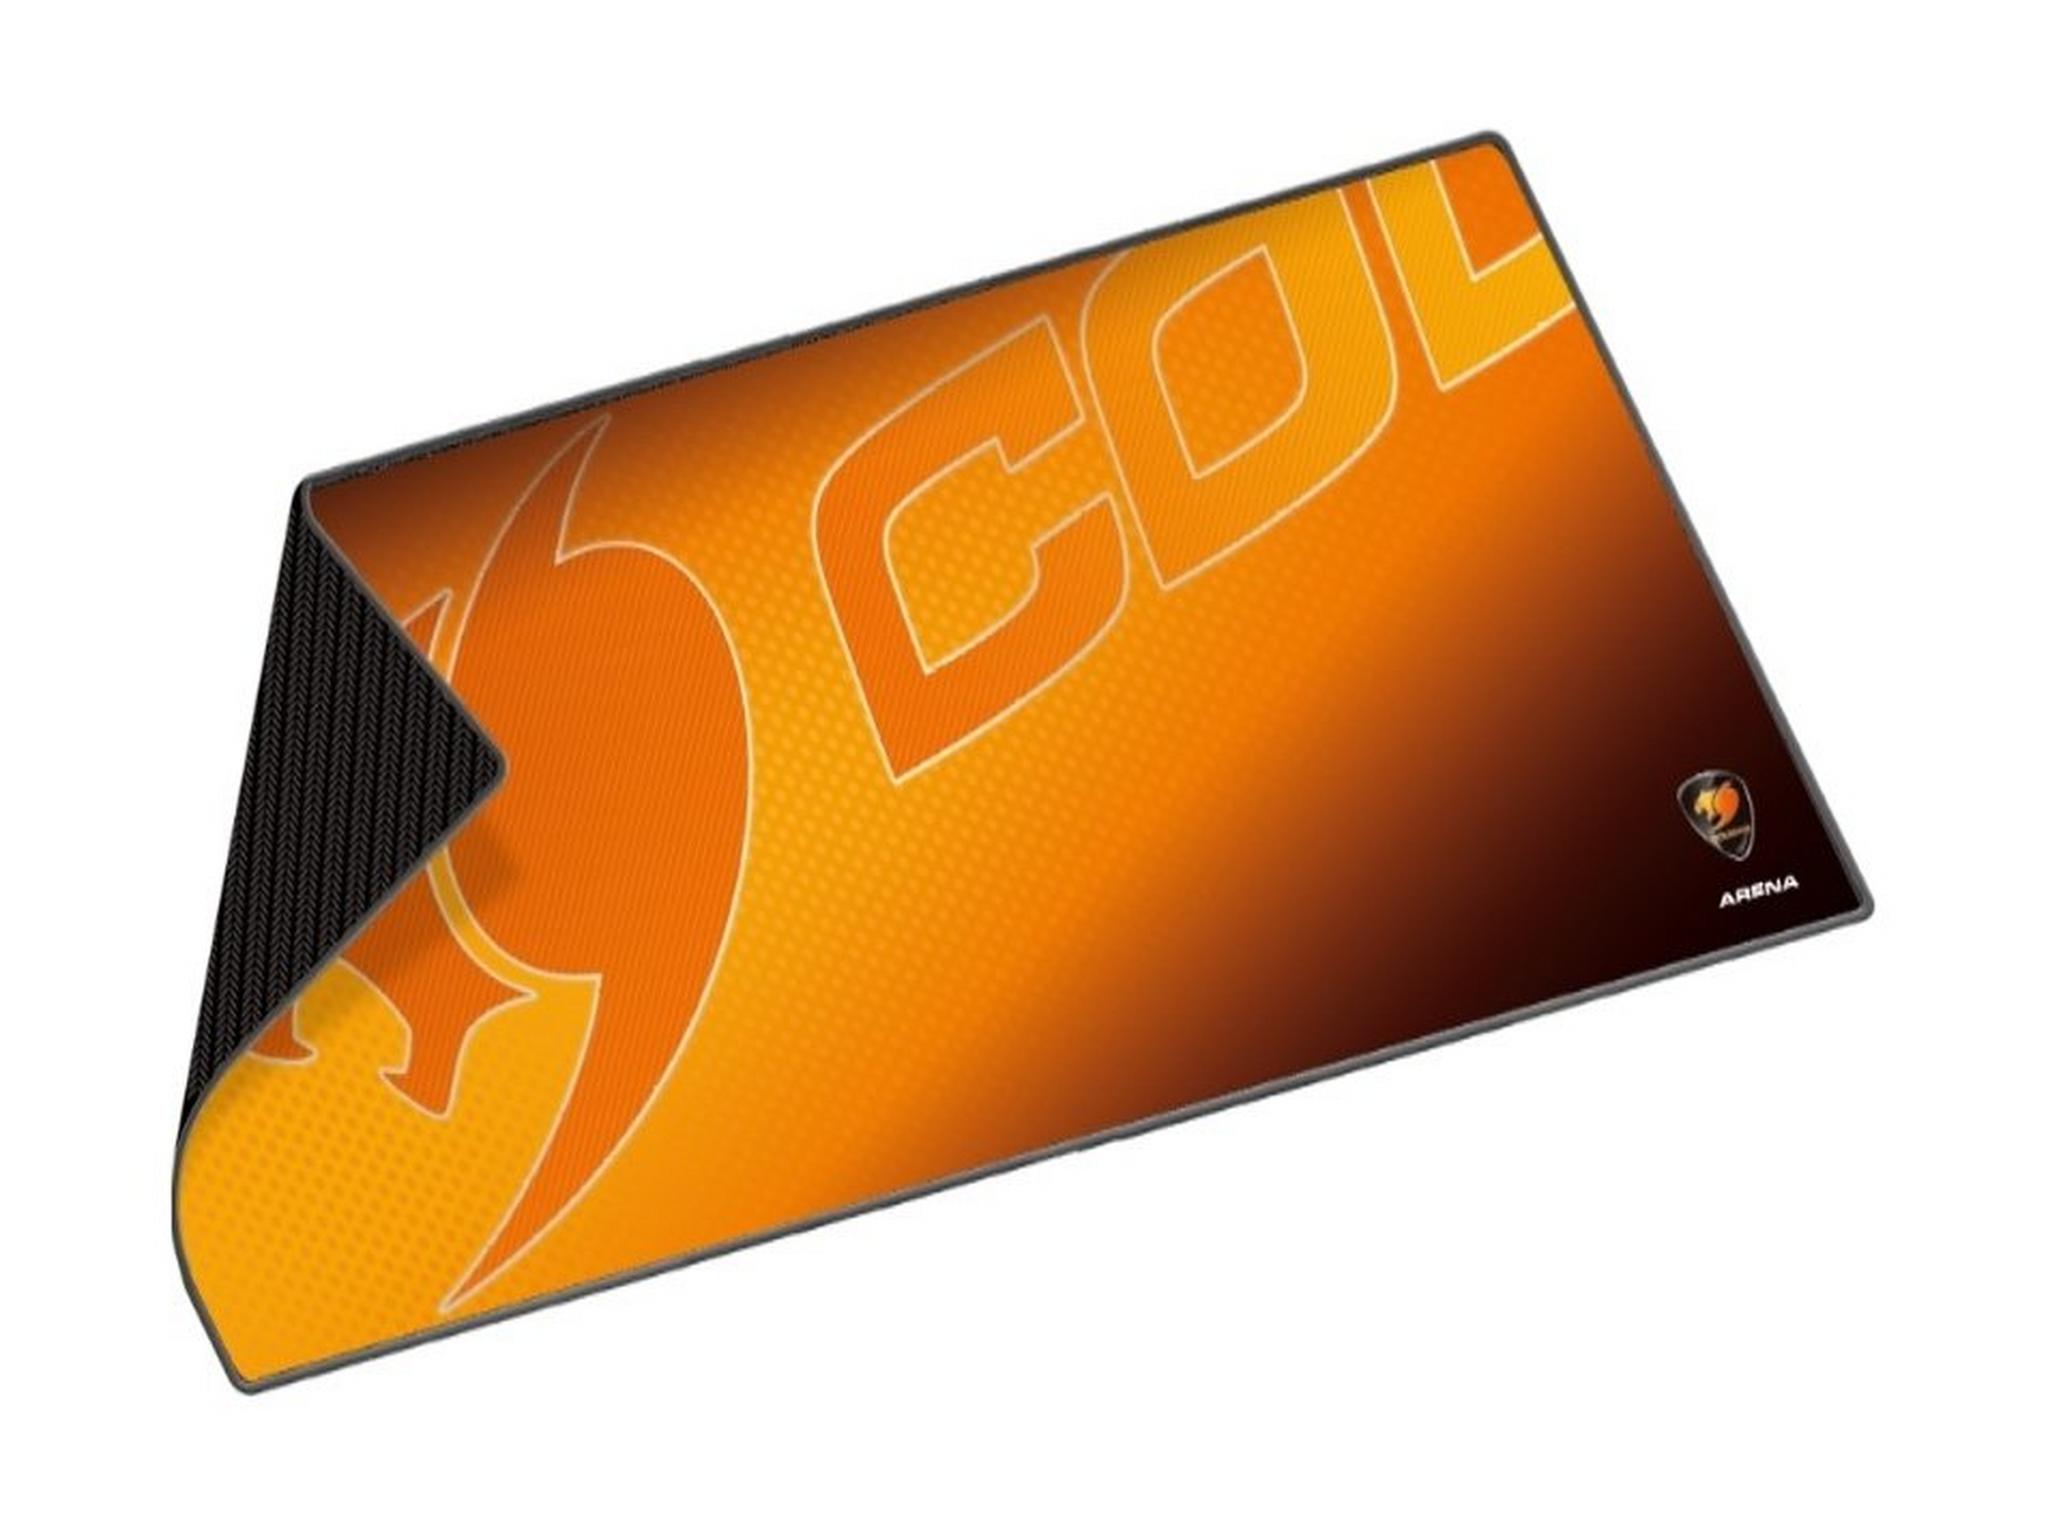 Cougar ARENA XL Gaming Mouse Pad - Orange